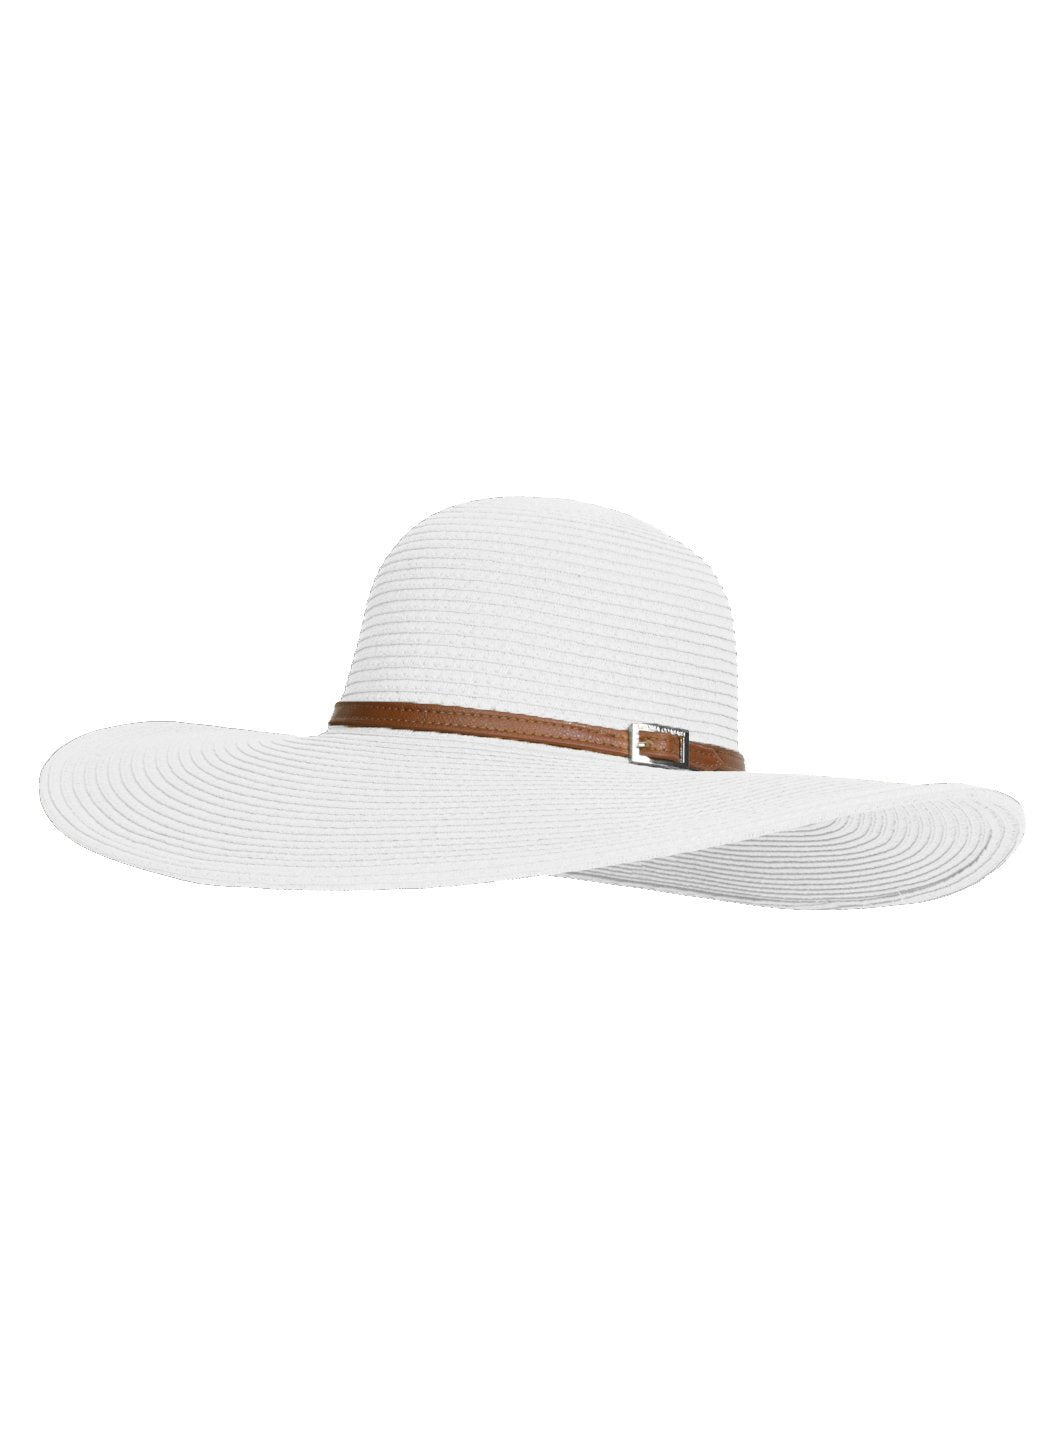 jemima hat white 